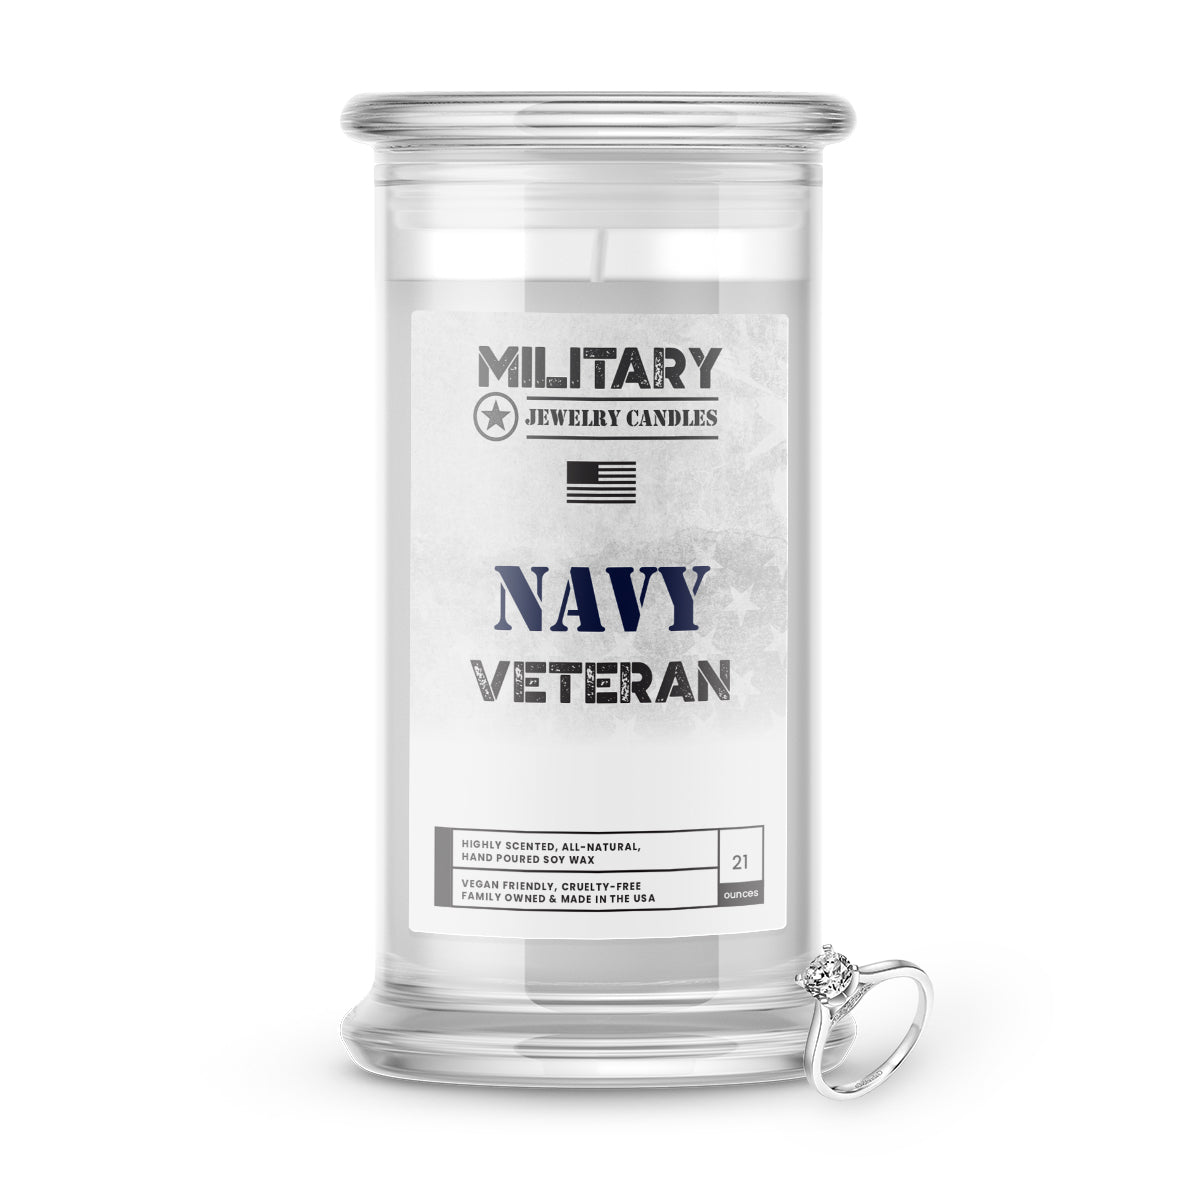 NAVY Veteran | Military Jewelry Candles